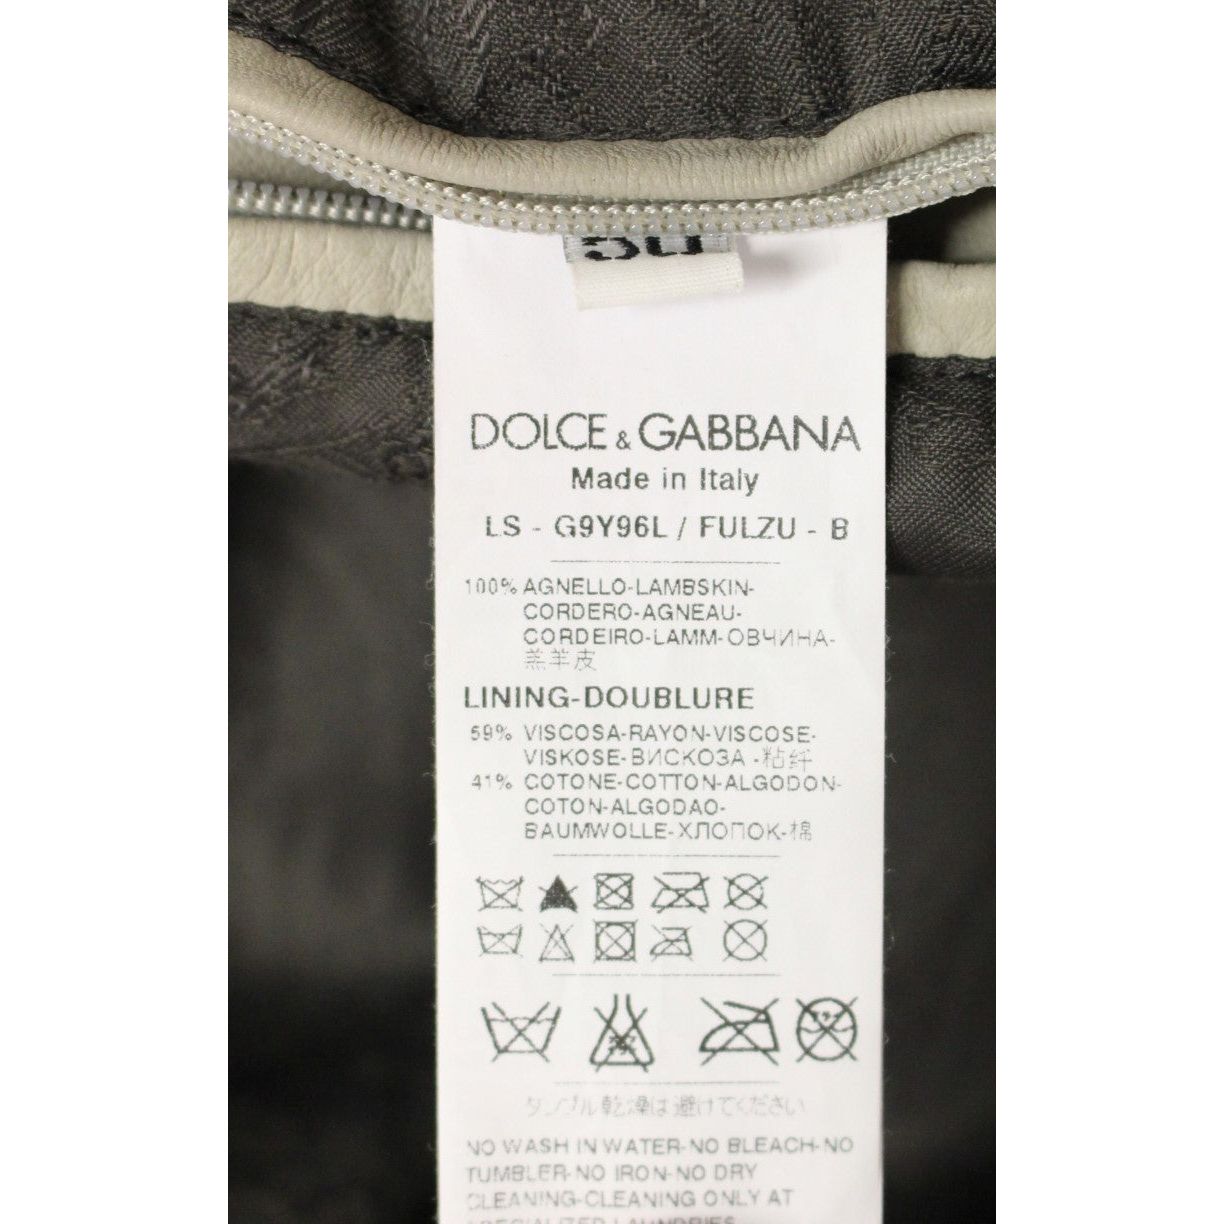 Dolce & Gabbana Elegant Beige Leather Lambskin Jacket Coats & Jackets beige-leather-jacket-biker-coat 54846-beige-leather-jacket-biker-coat-2-9.jpg